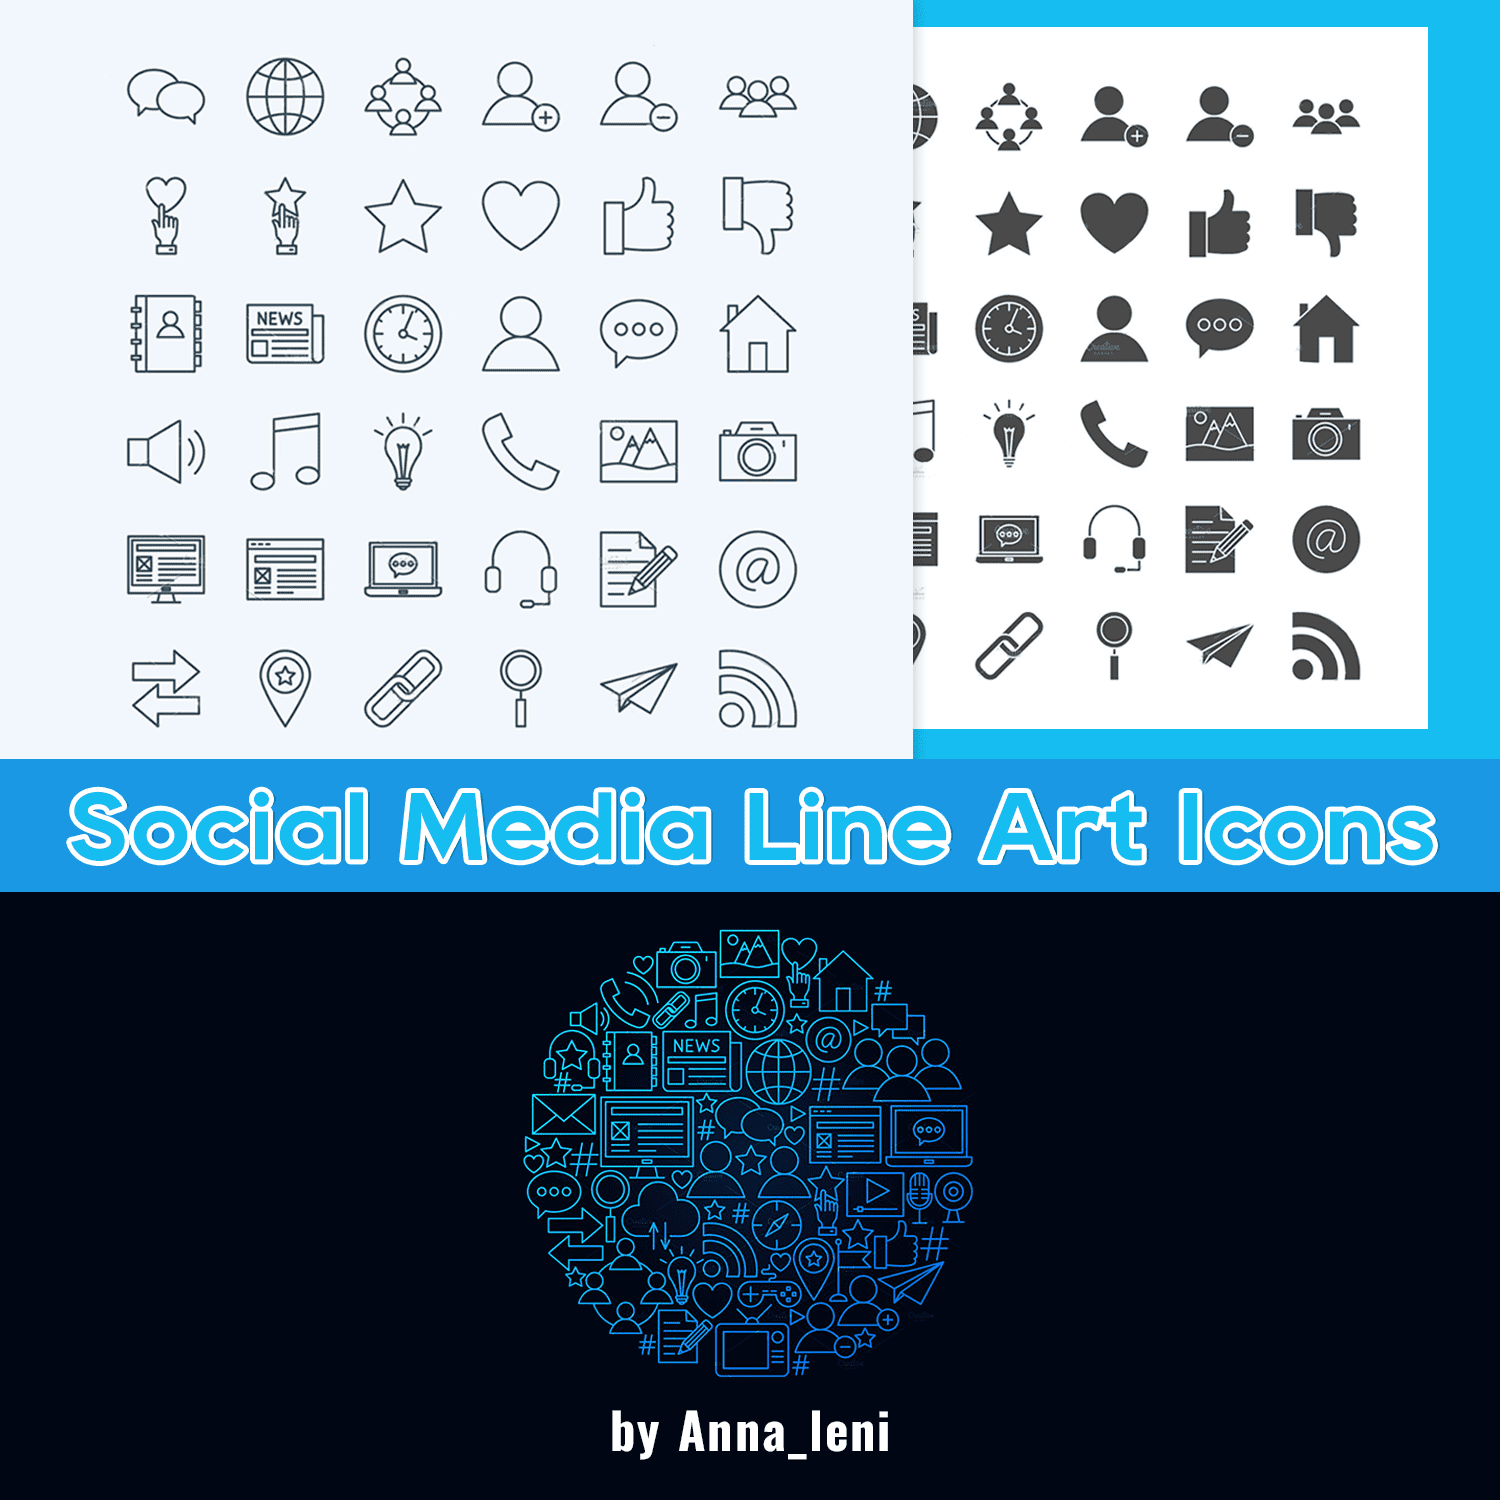 Social Media Line Art Icons.